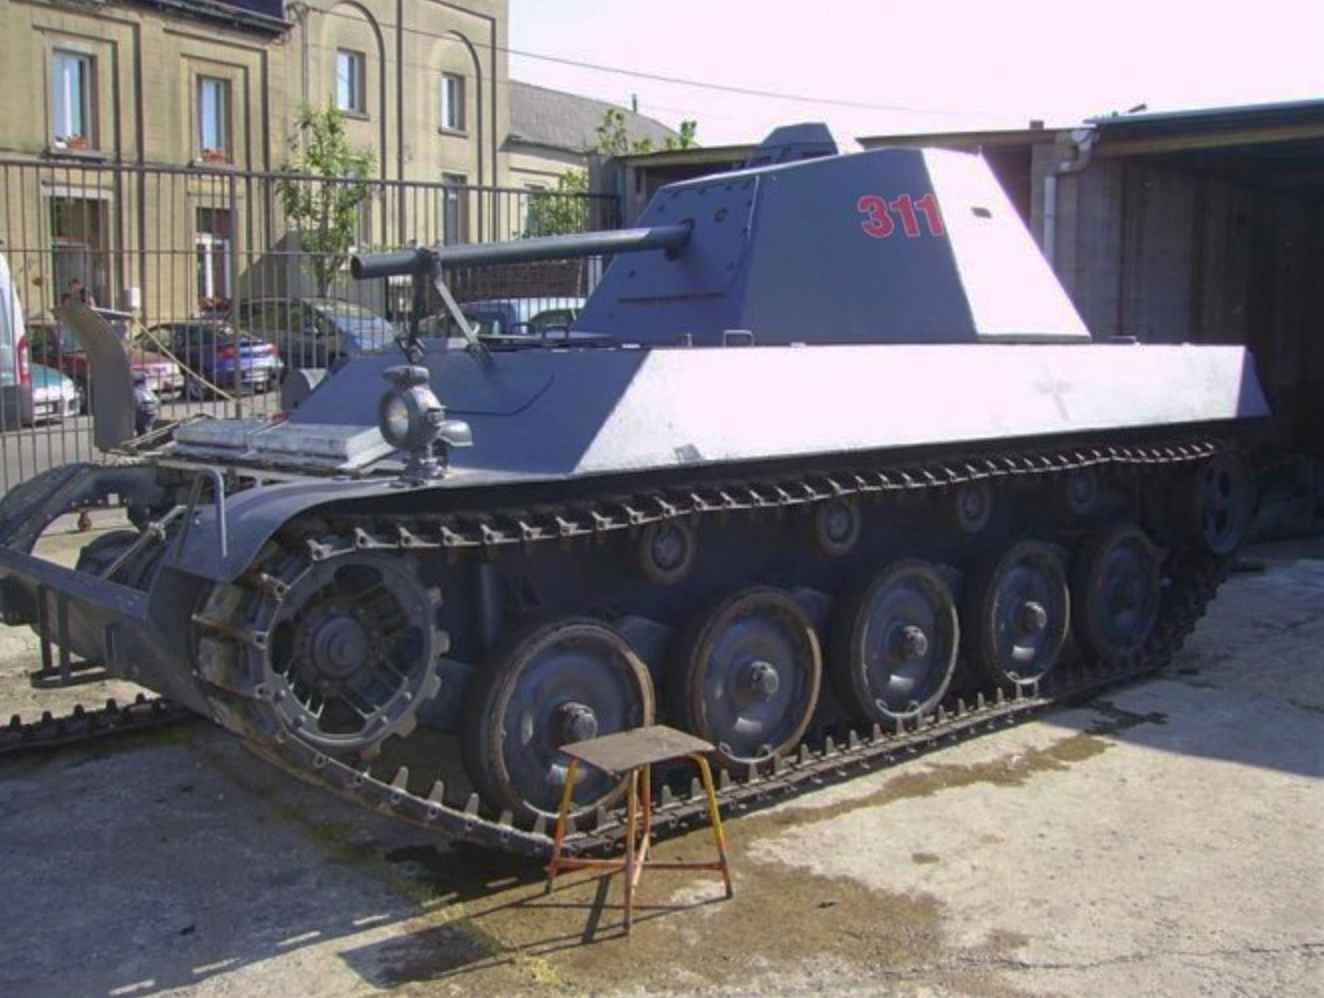 Mowag Pirat, tanks for sale to civilians